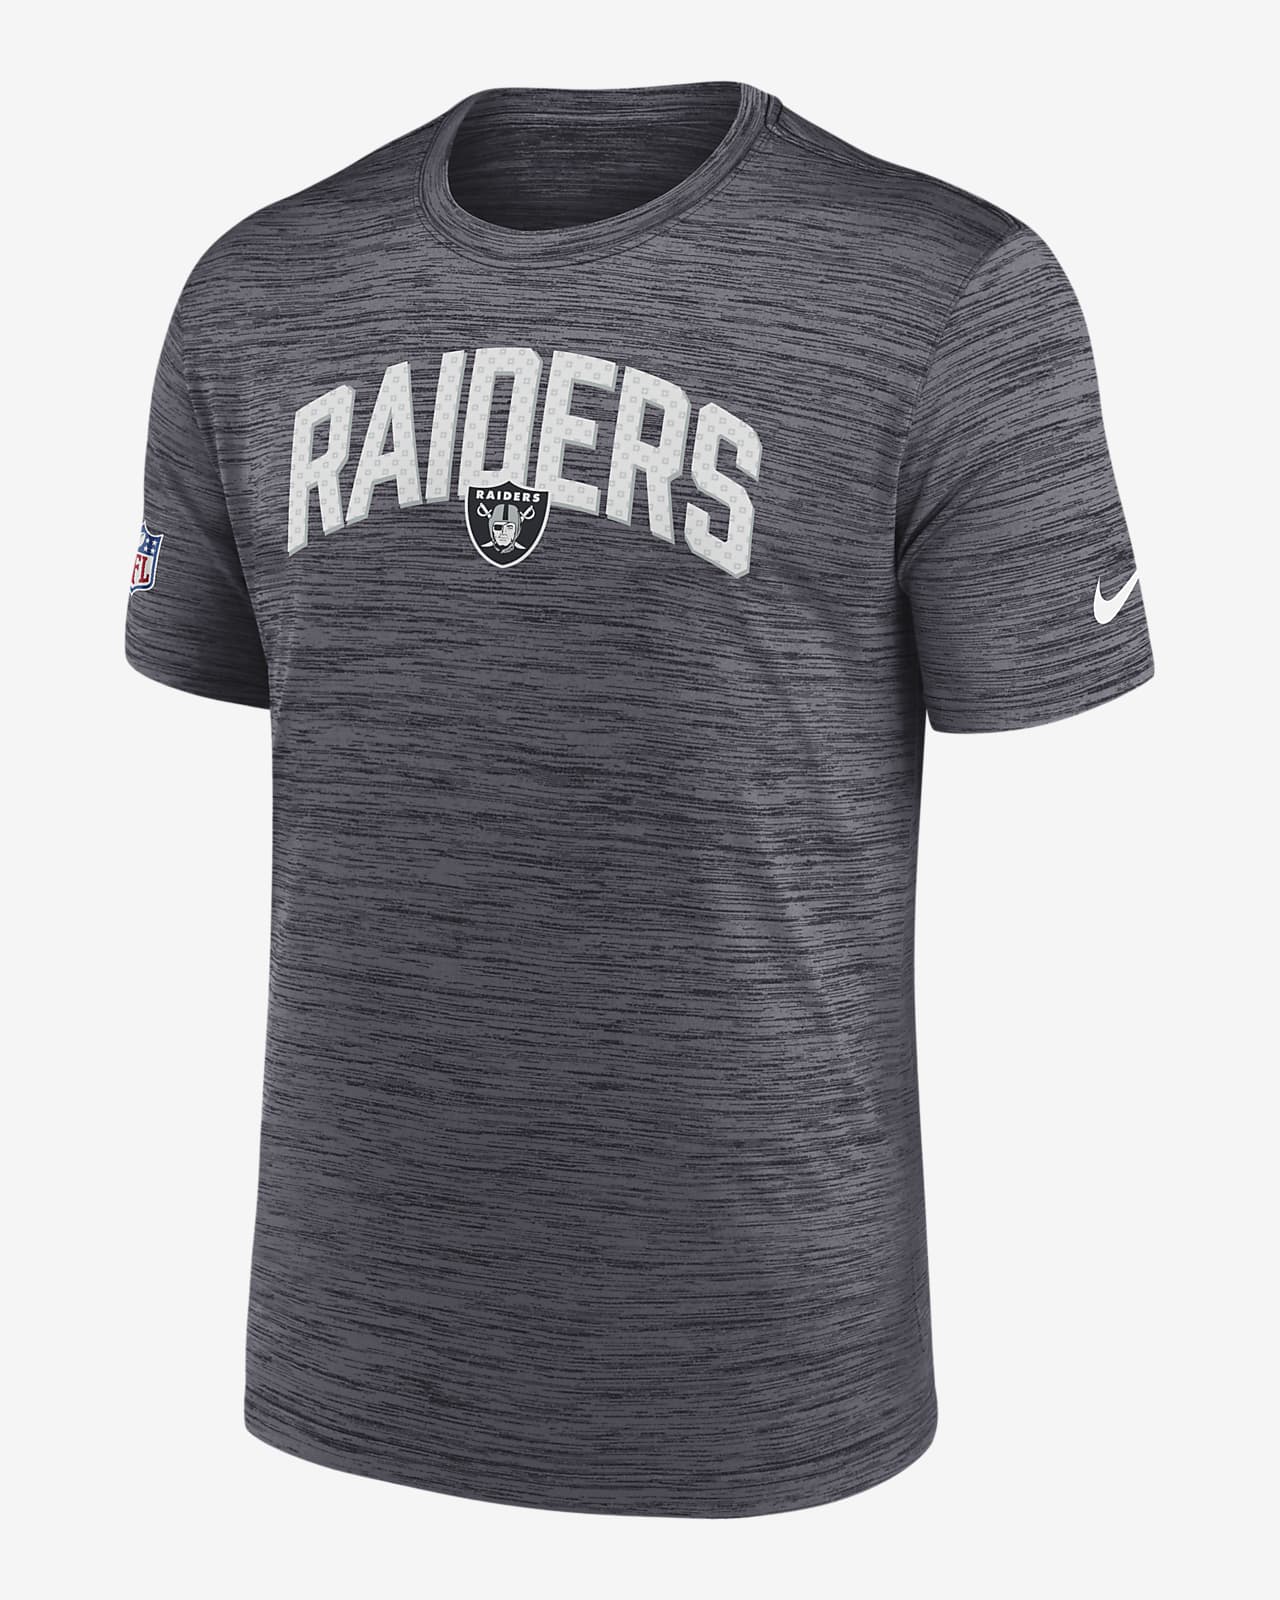 Men's Nike Black Las Vegas Raiders Sideline Velocity Athletic Stack Performance T-Shirt Size: 3XL